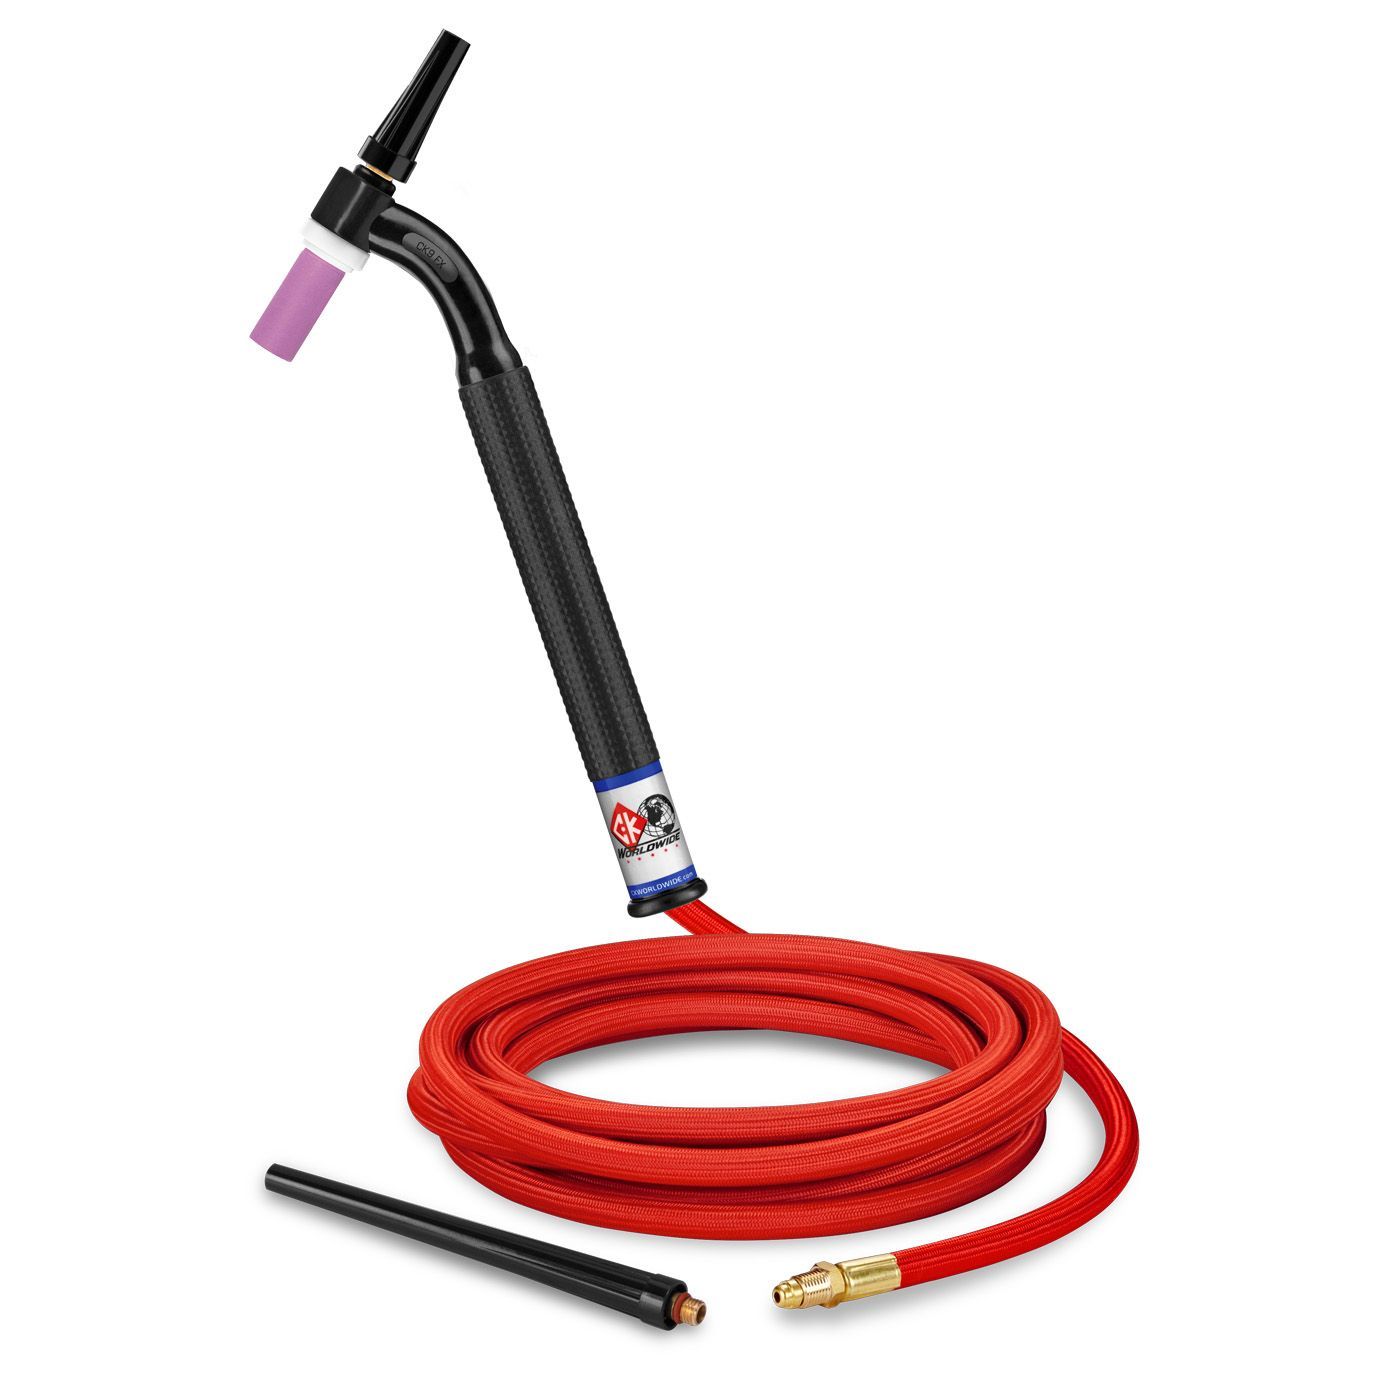 CK Worldwide TIG Torch #9  - 2 Series Flex Head (Gas Cooled) (CK9-12-RSF FX) W/ 12.5ft. Super Flex Cable